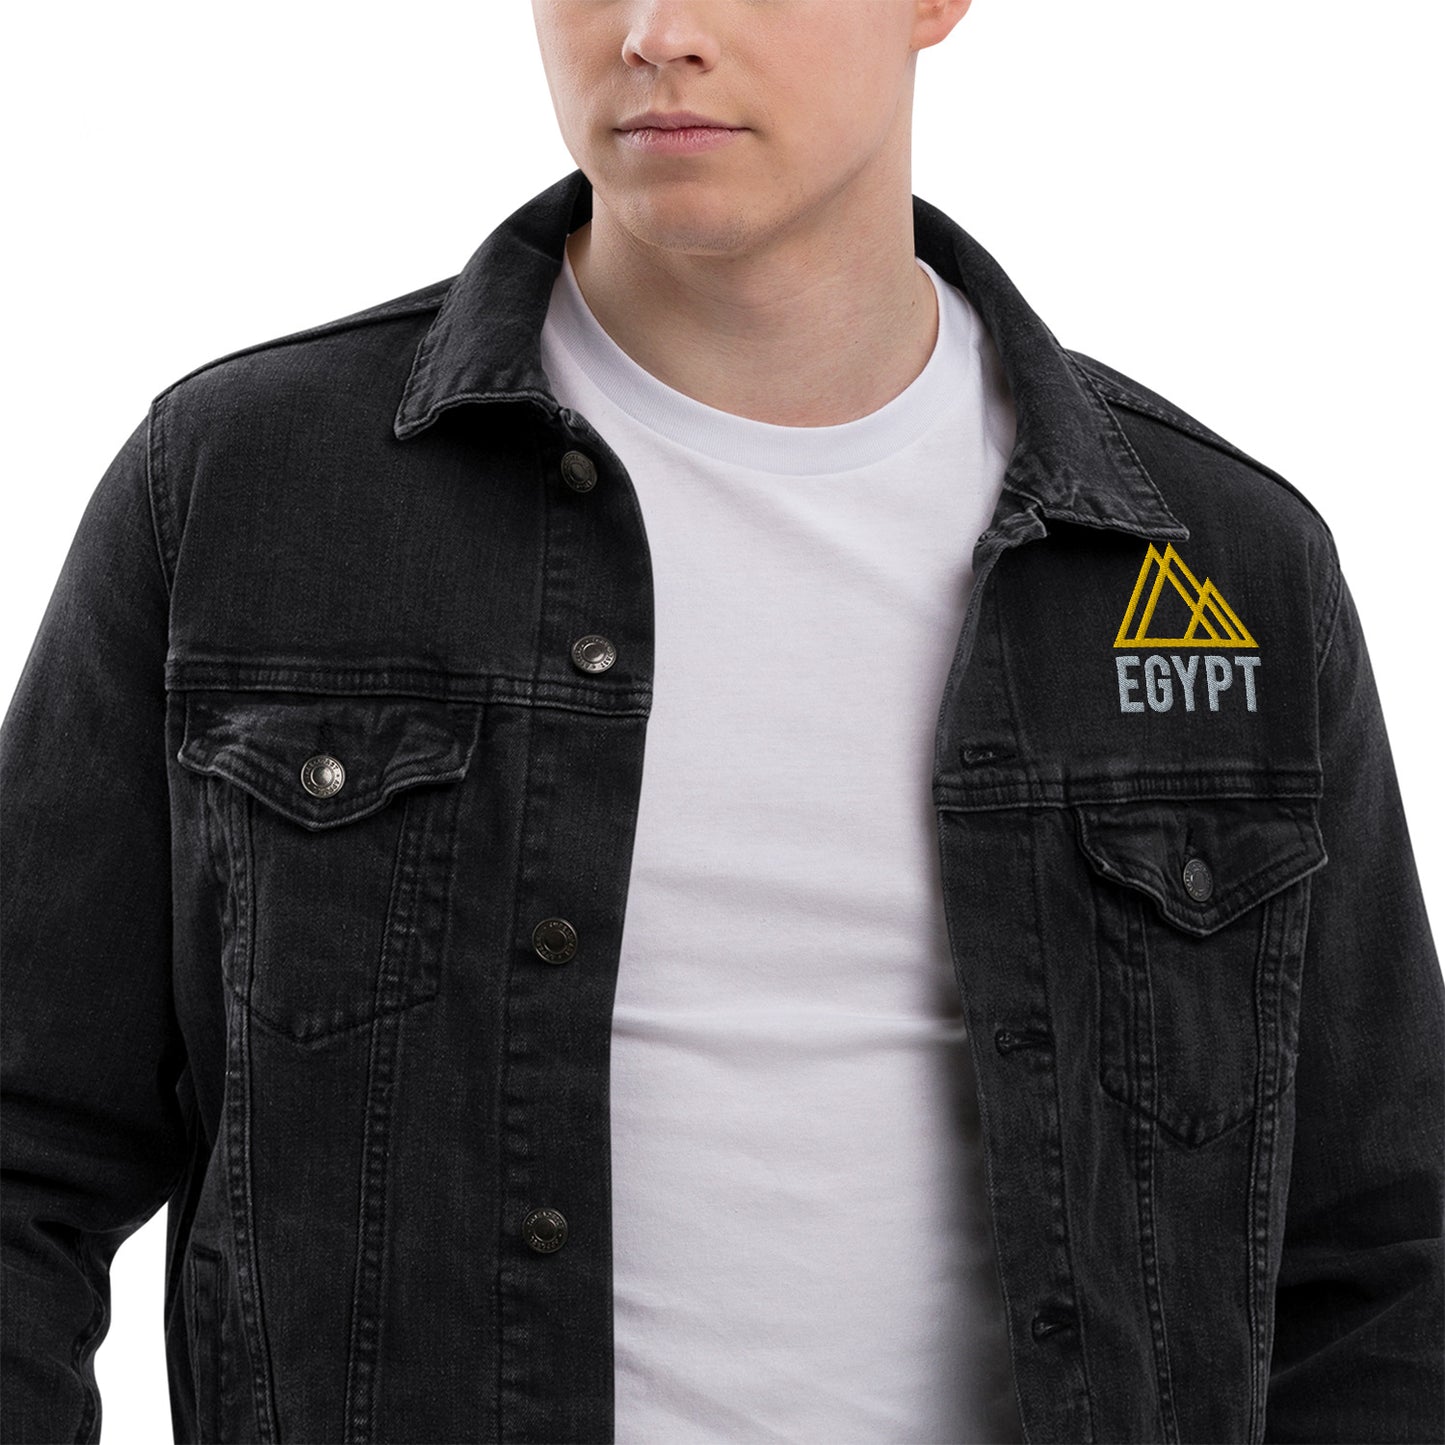 EGYPT Unisex Denim Jacket (Black)